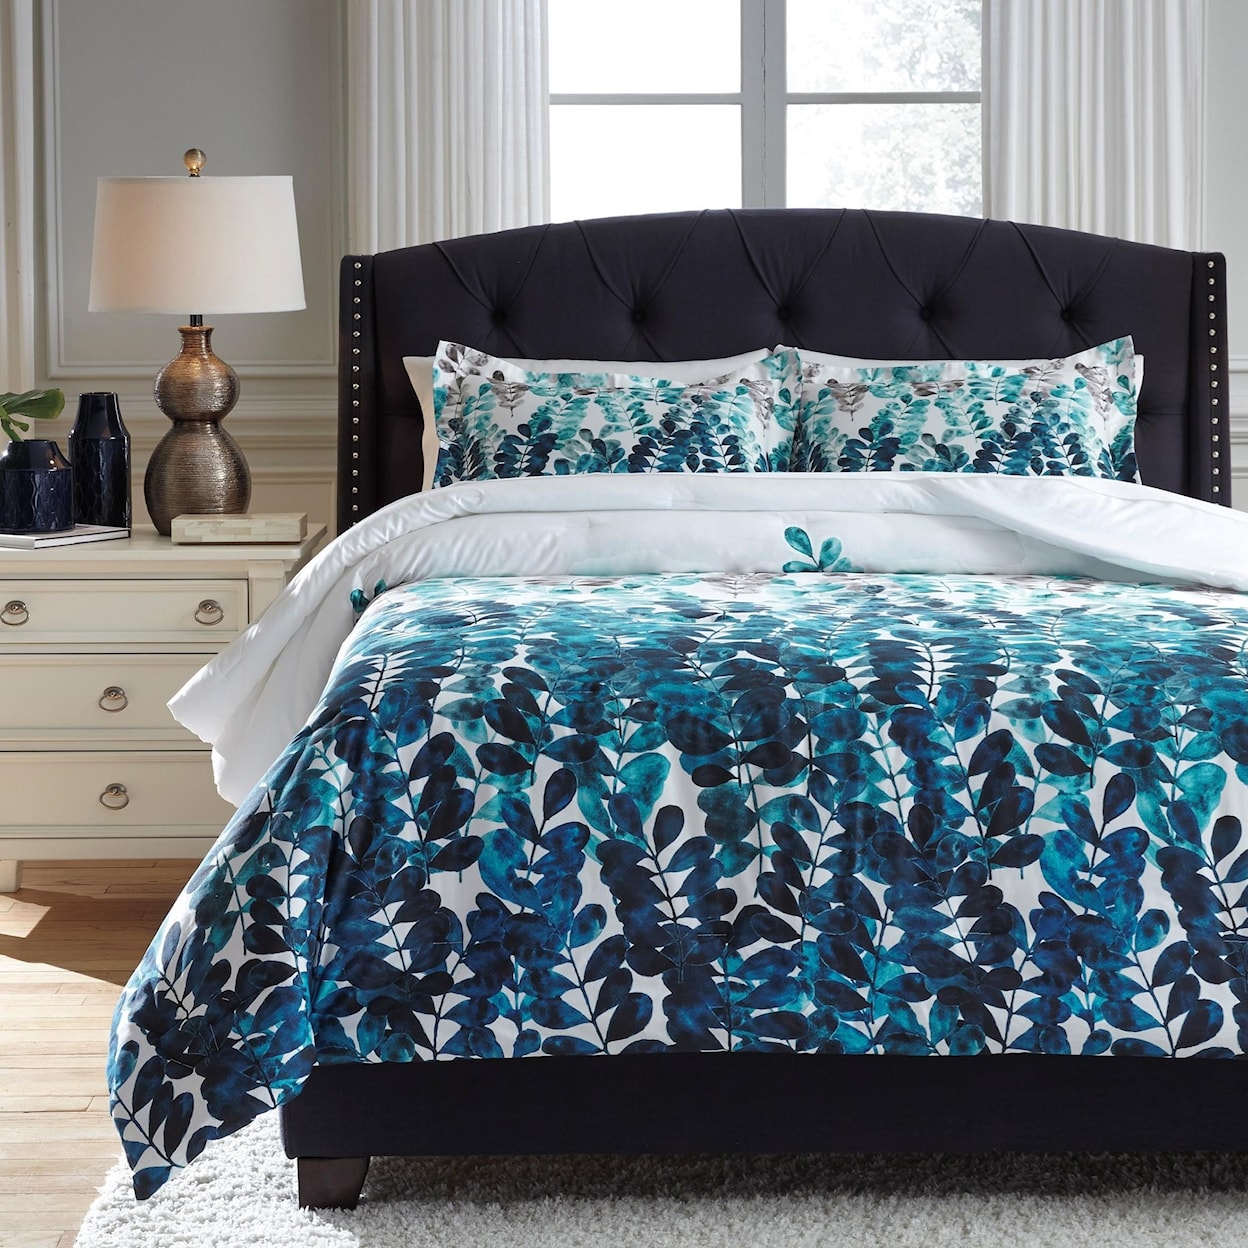 Ashley Furniture Signature Design Bedding Sets King Clearfield Bluel Comforter Set